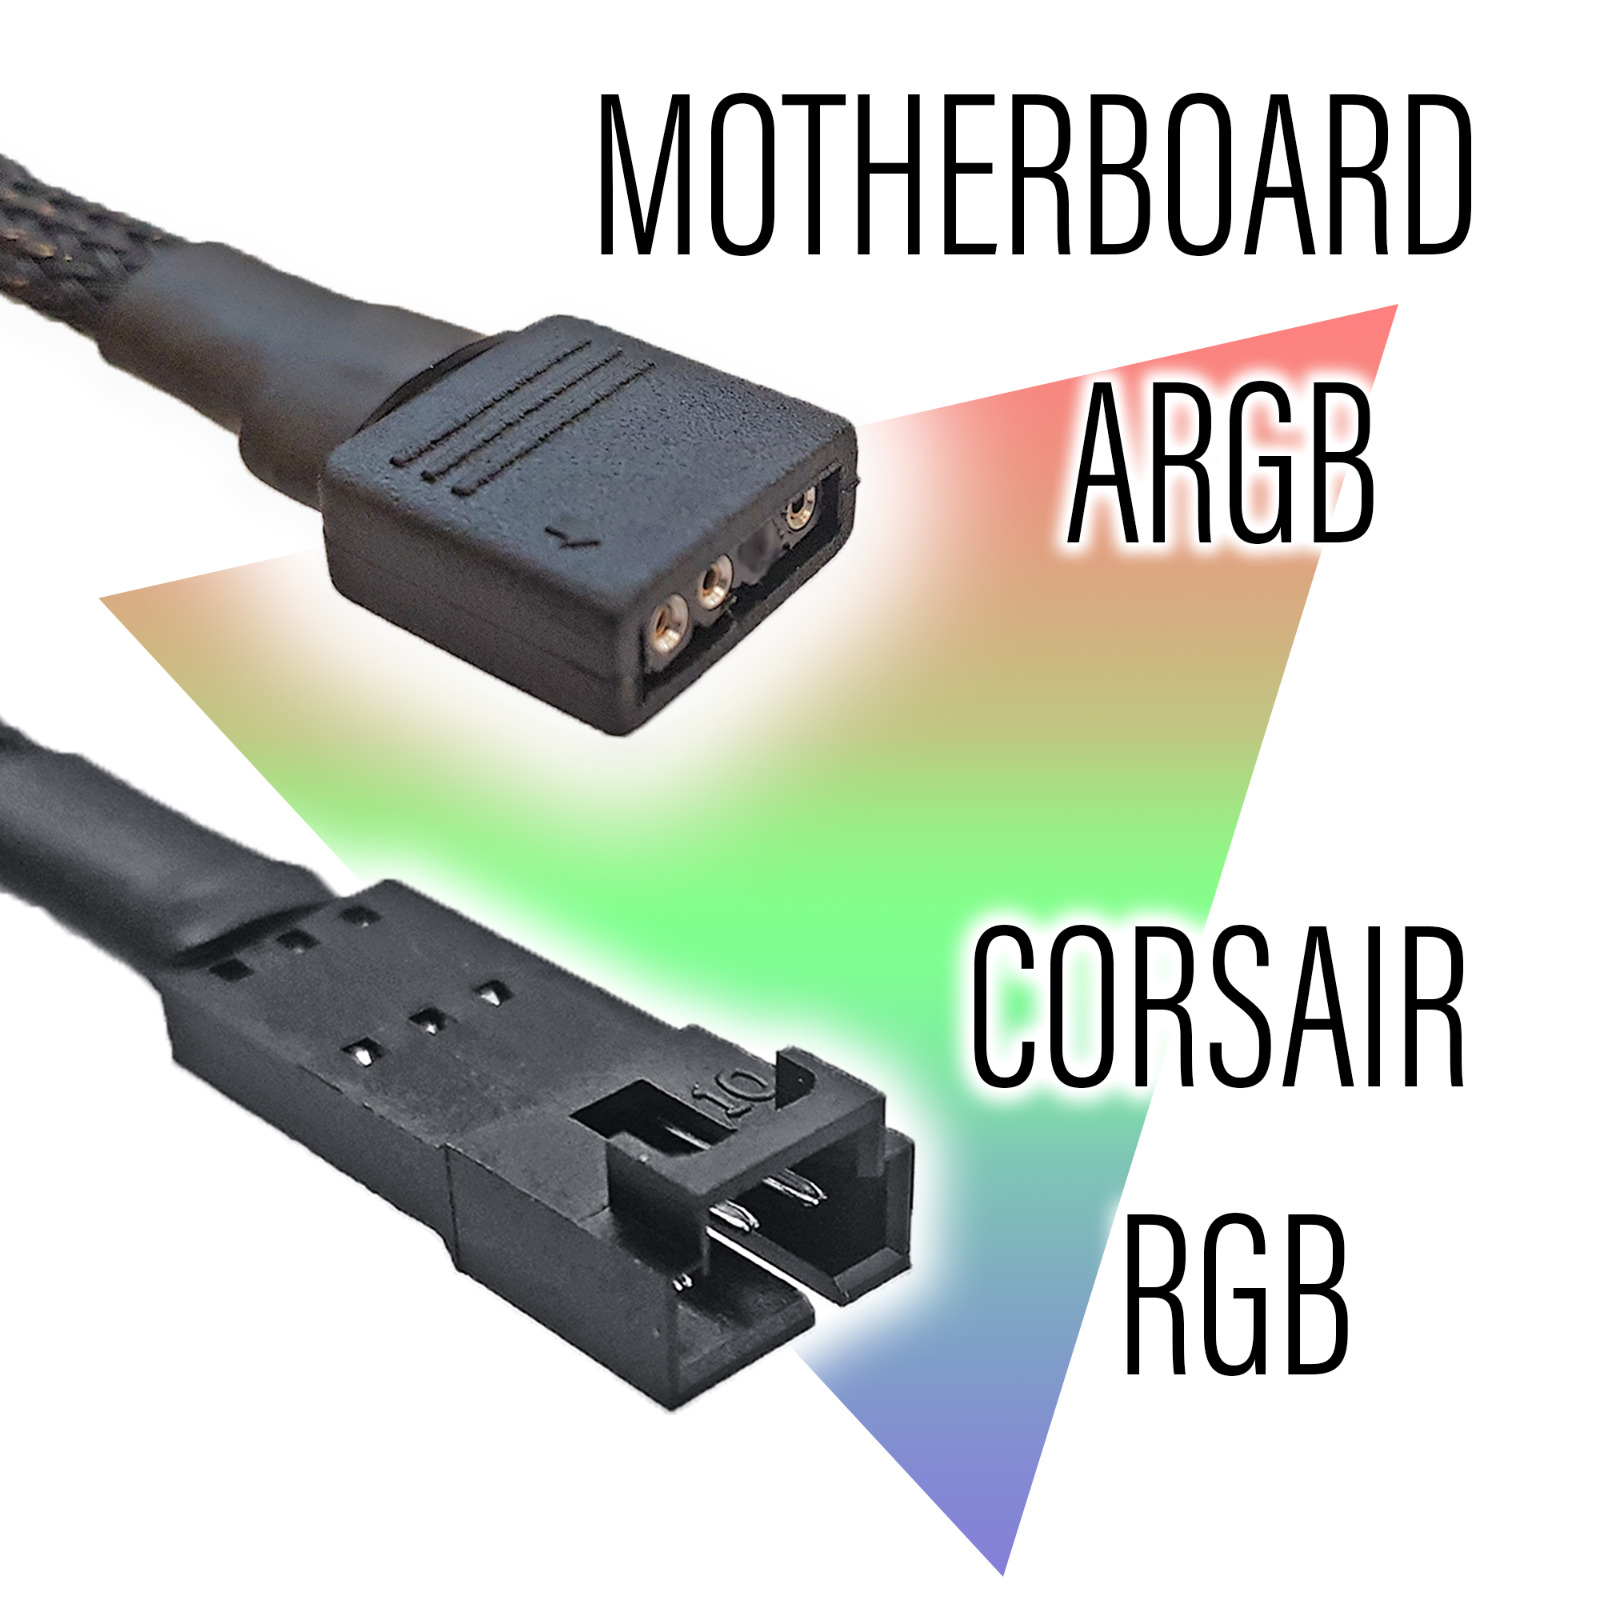 Motherboard Standard ARGB 3-pin 5V to Corsair RGB Adapter